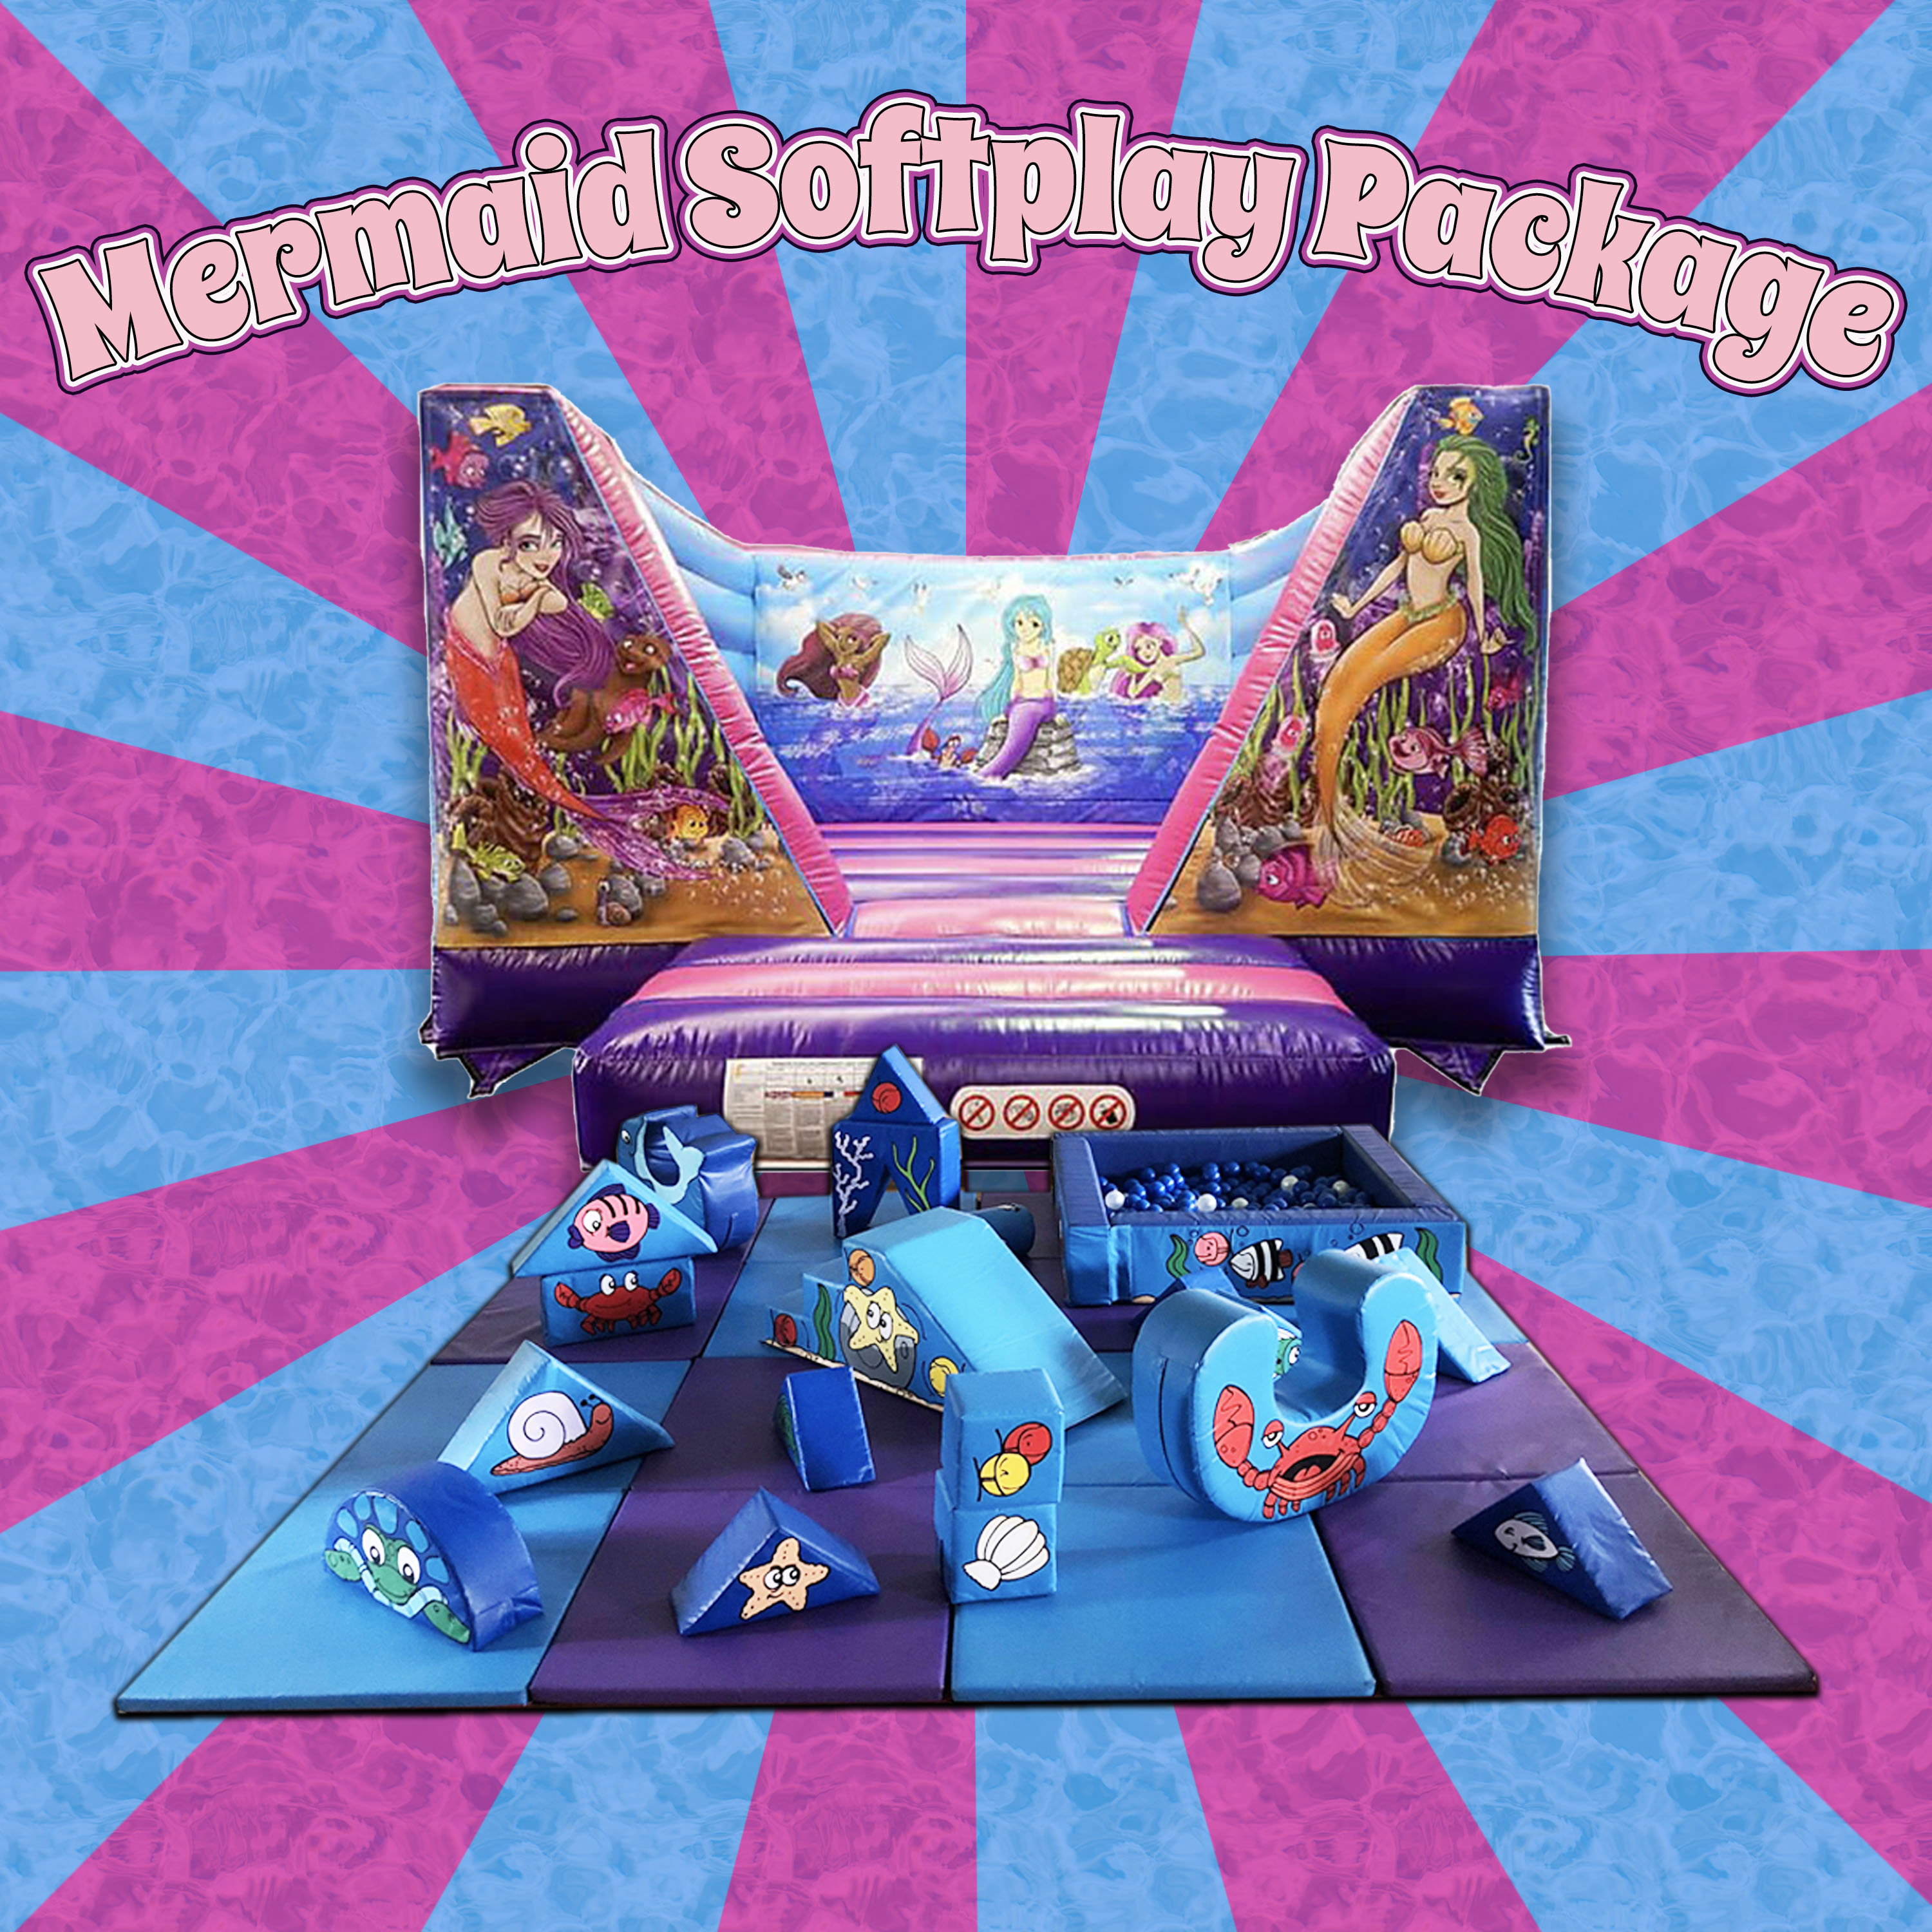 Mermaid bouncy castle and softplay package